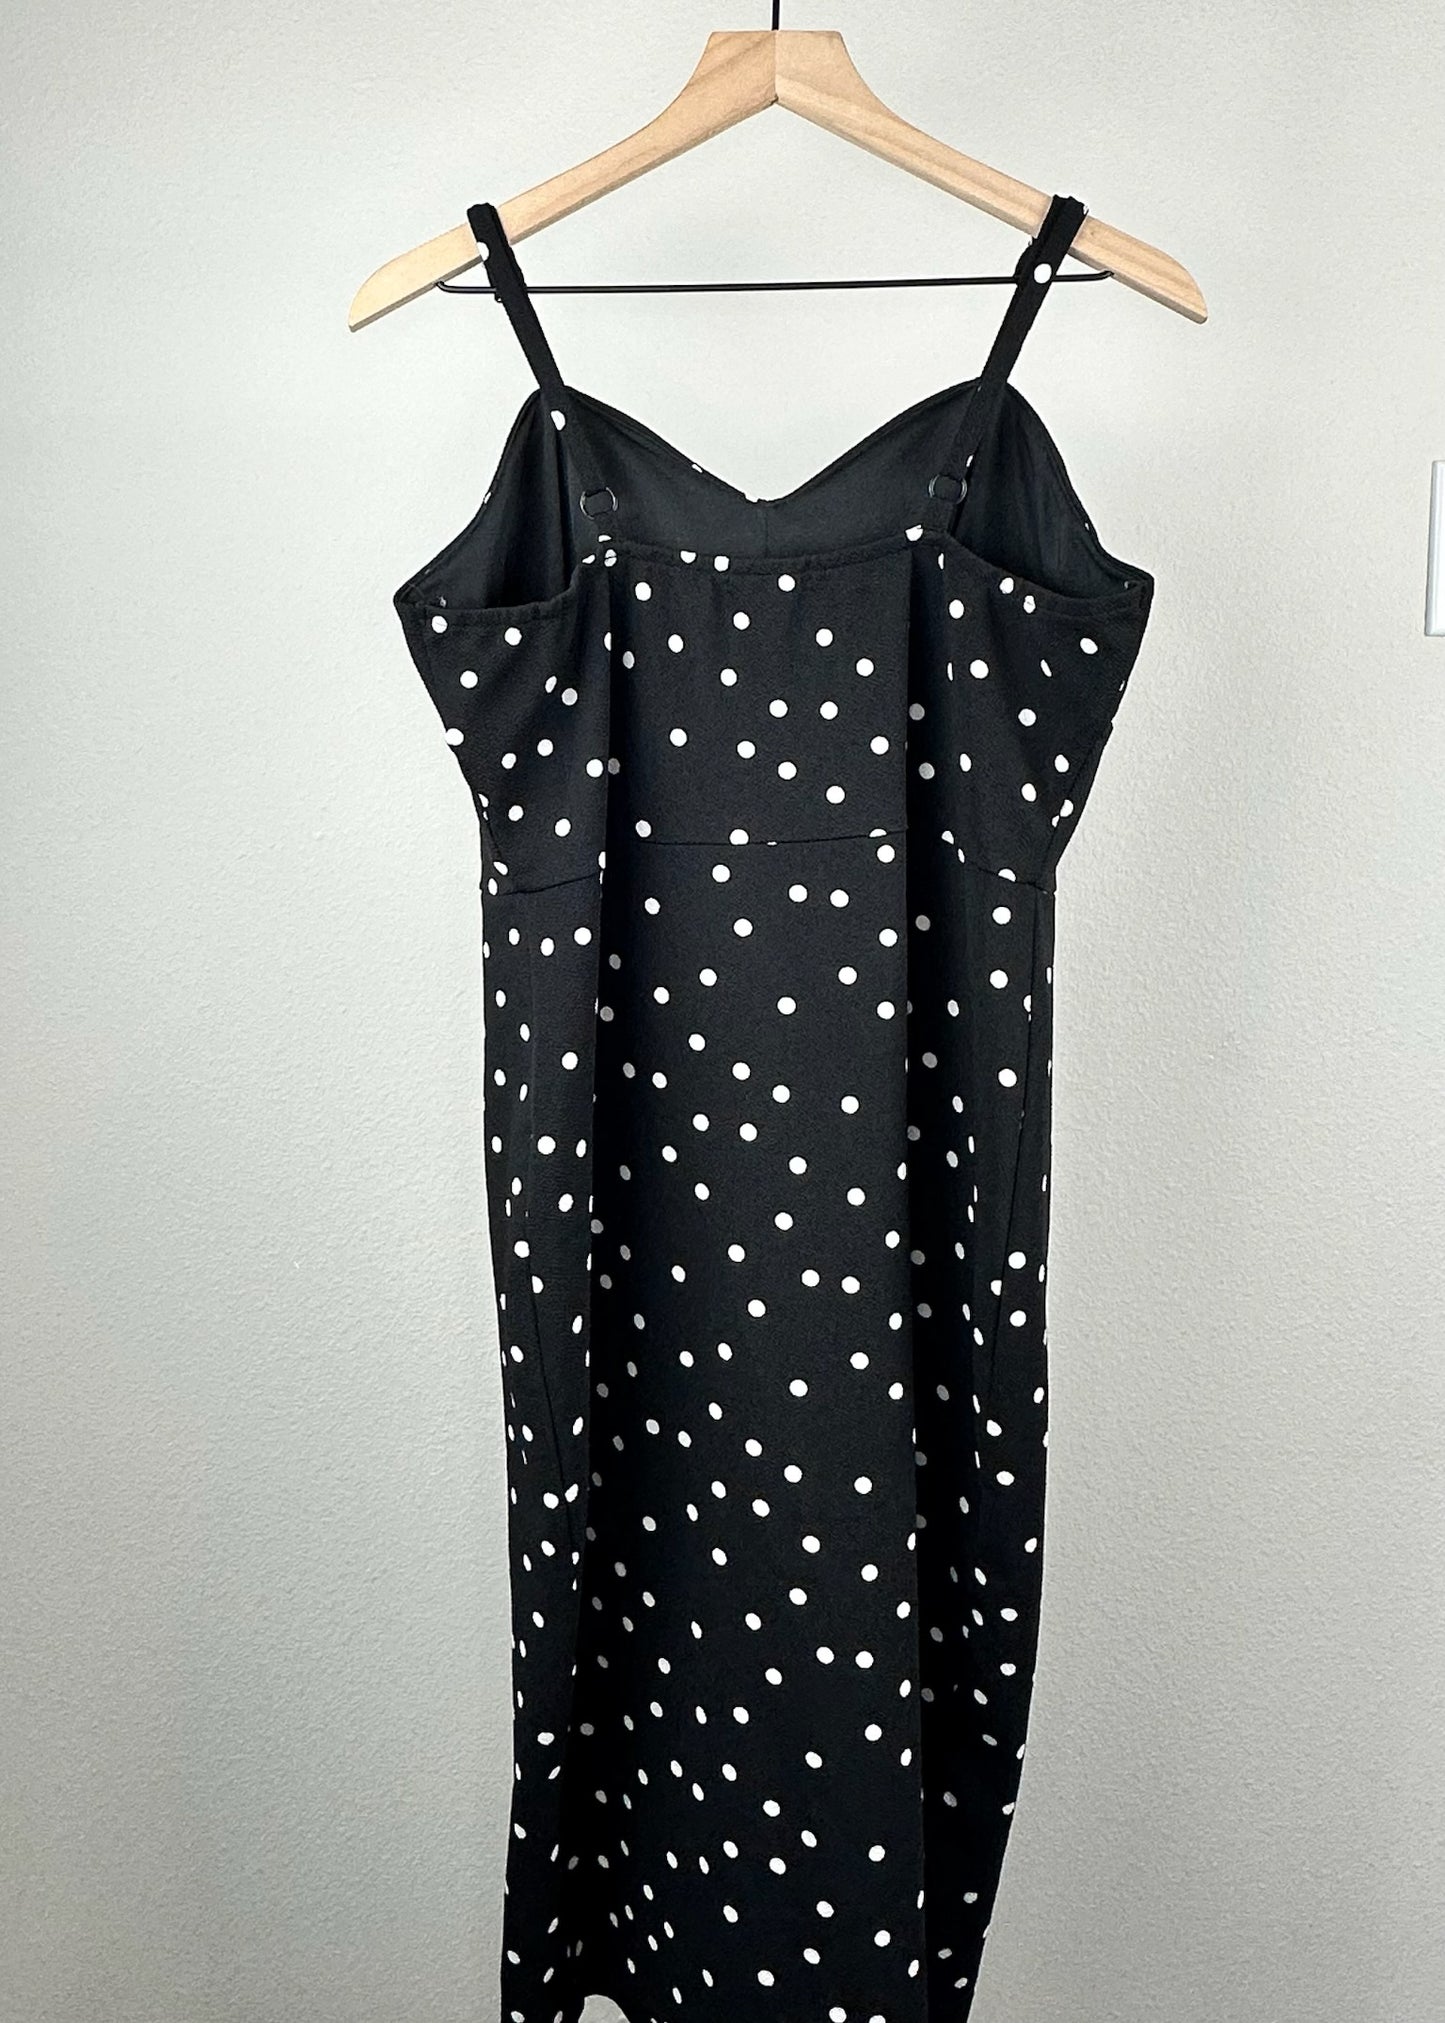 Black and White Polka Dot Dress by Fashion Nova